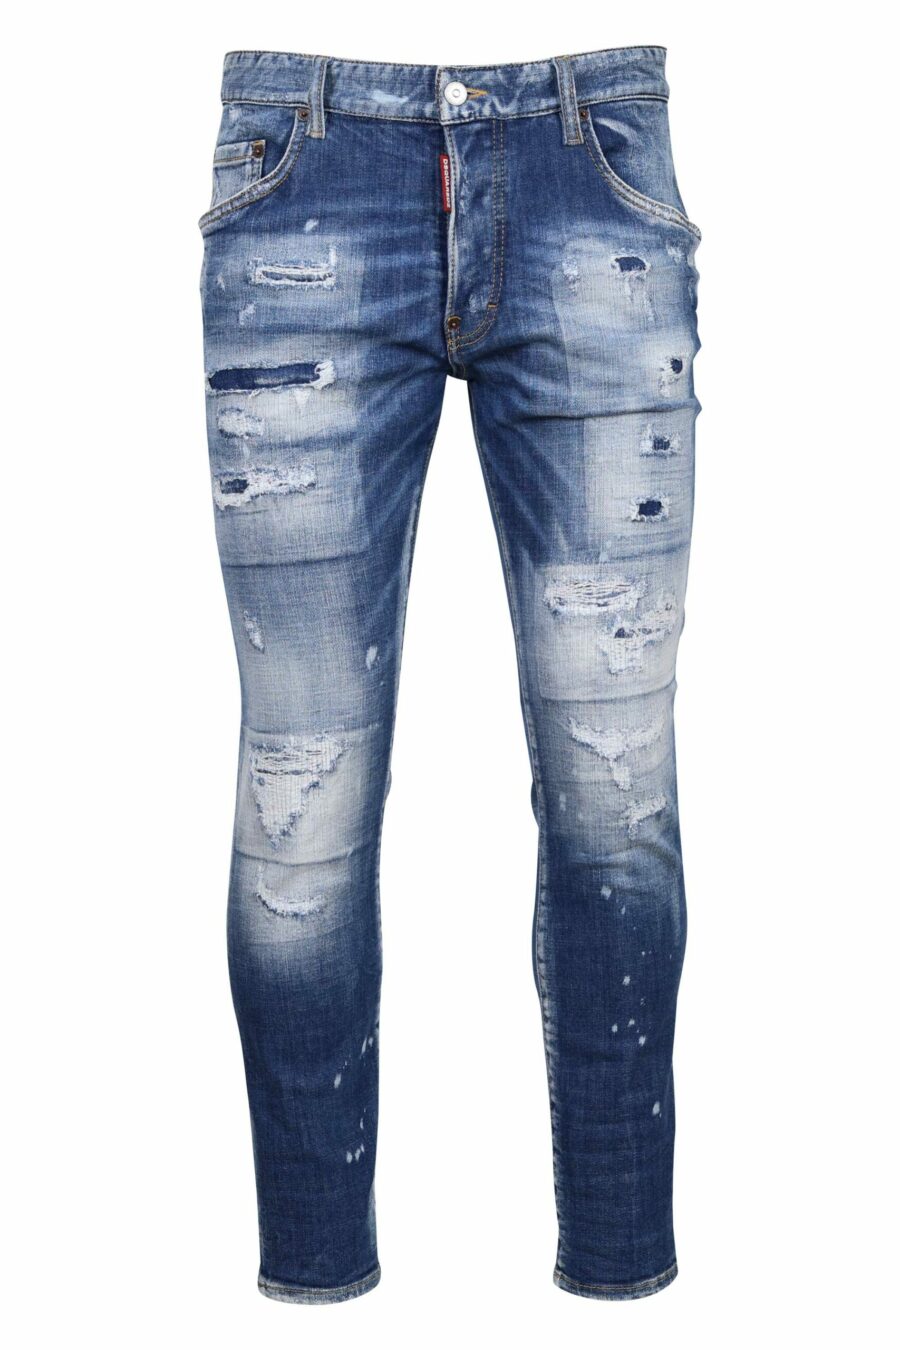 Pantalón vaquero azul claro "skater jean" con rotos y desgastado - 8054148338848 scaled